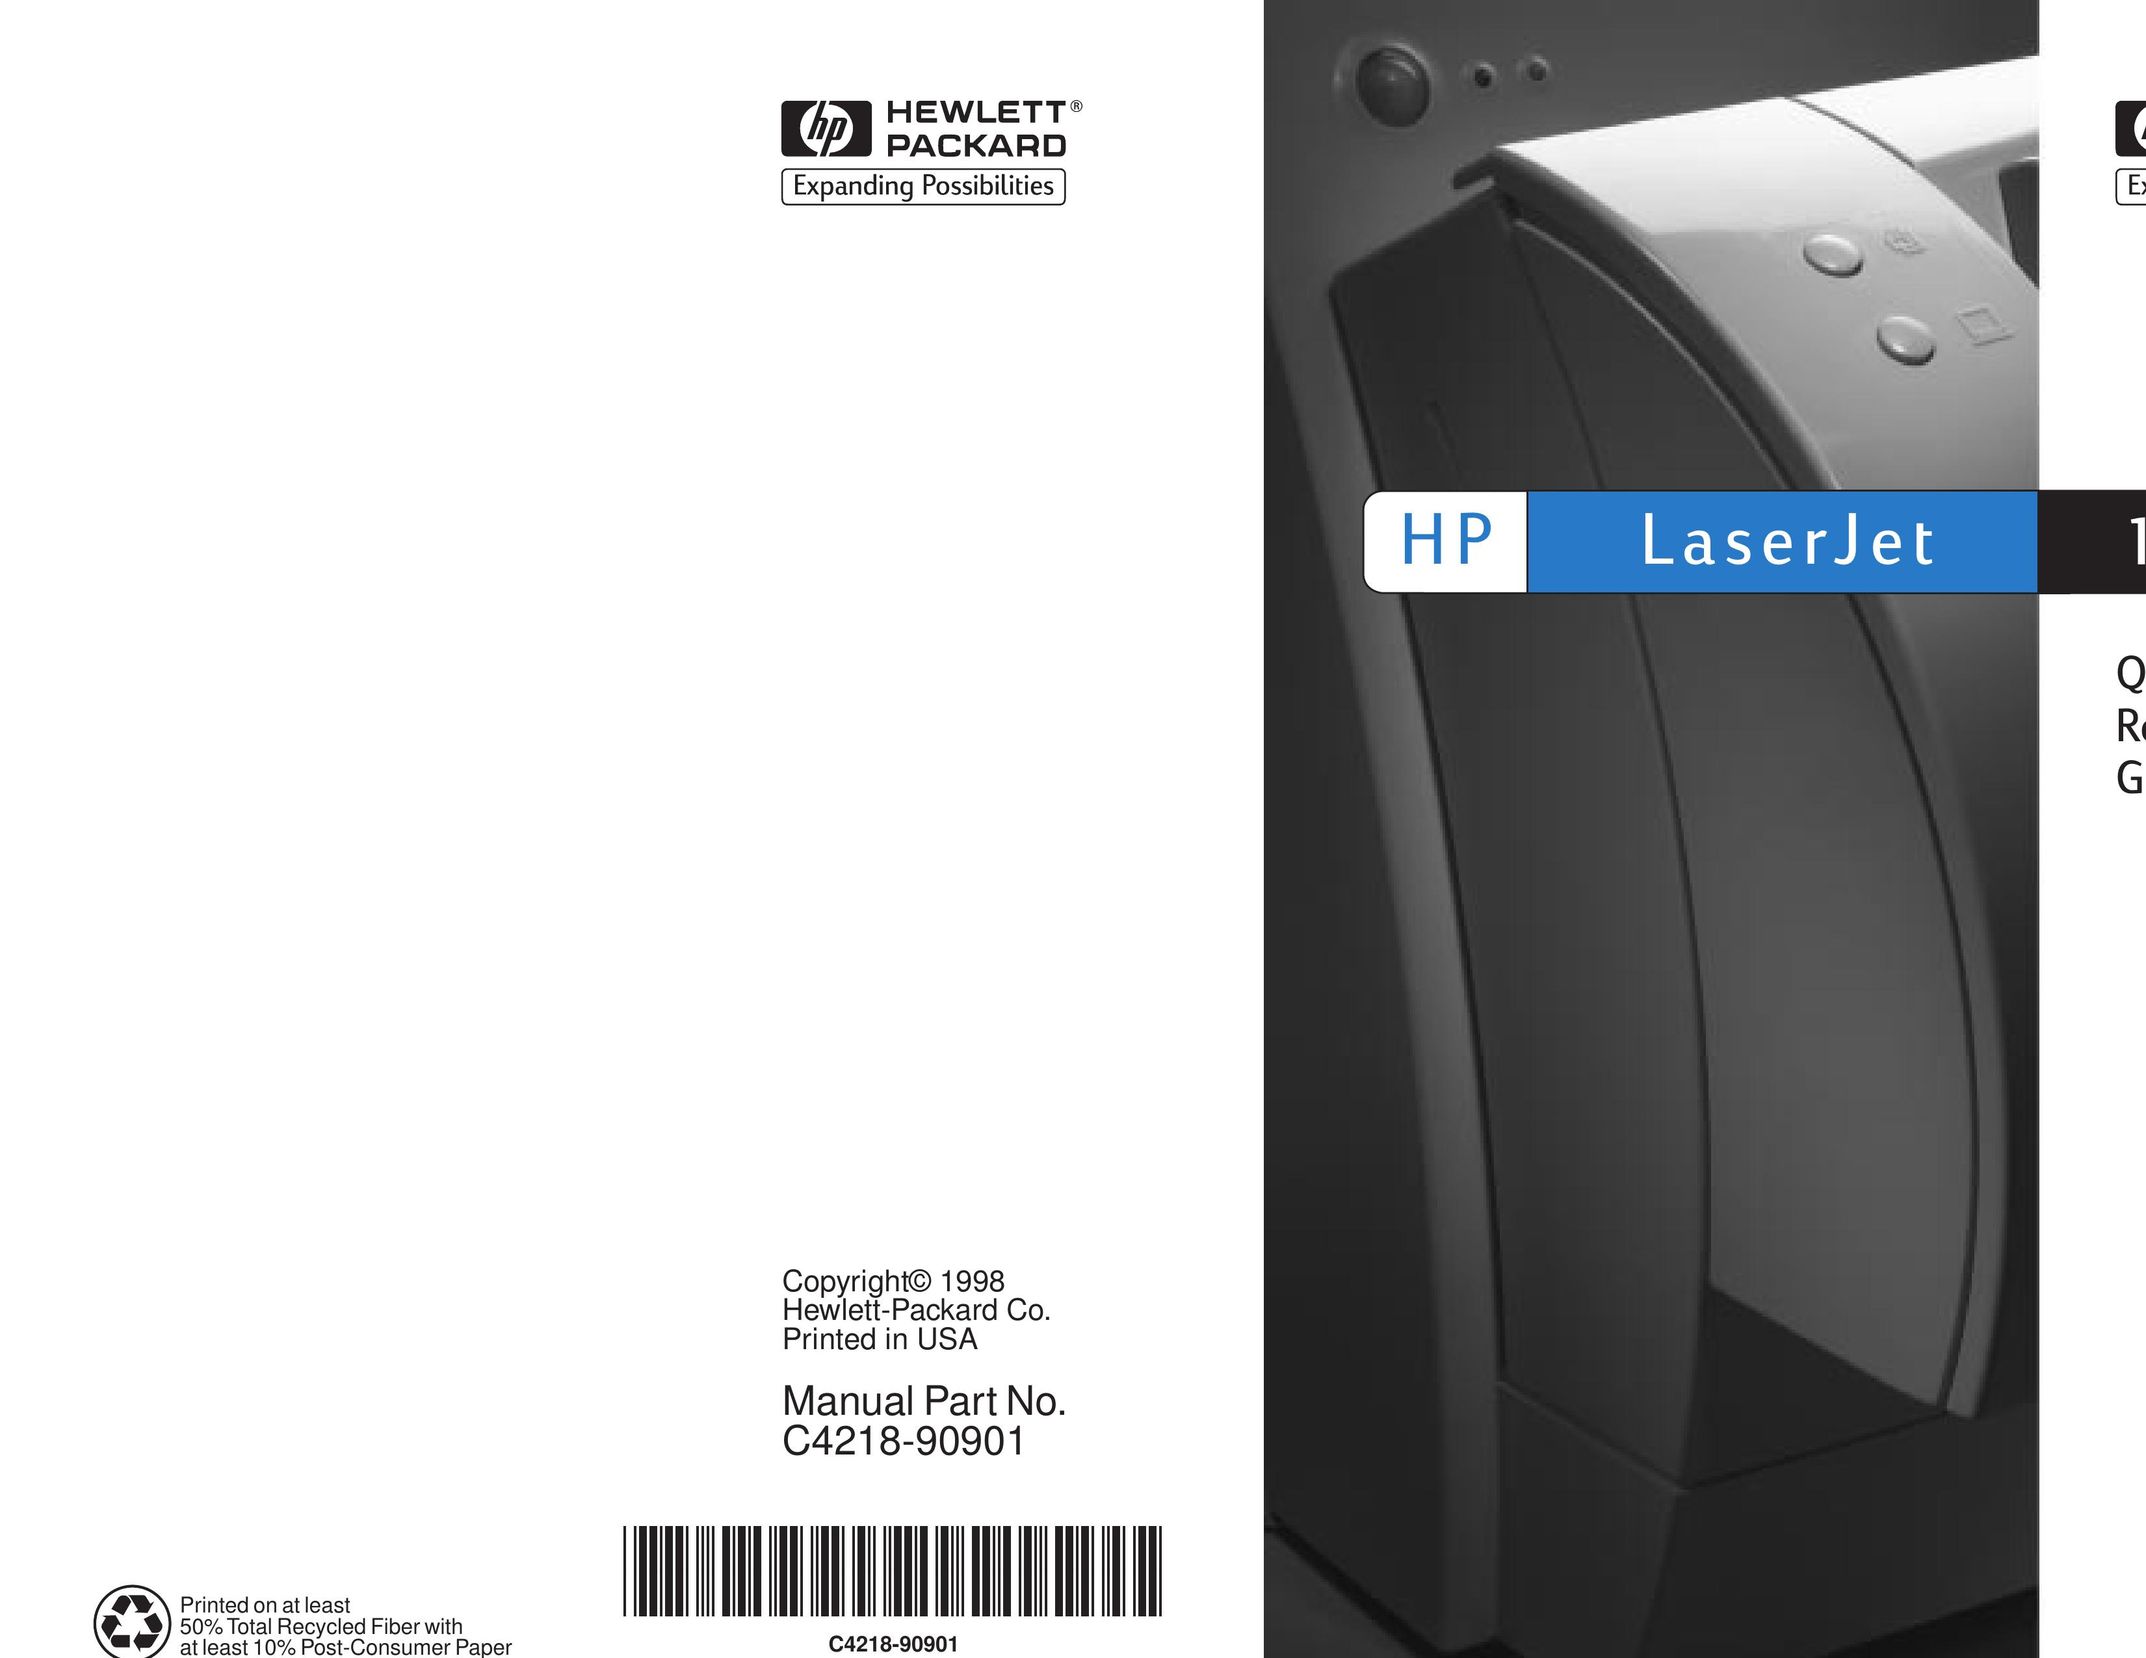 HP (Hewlett-Packard) 1100 All in One Printer User Manual